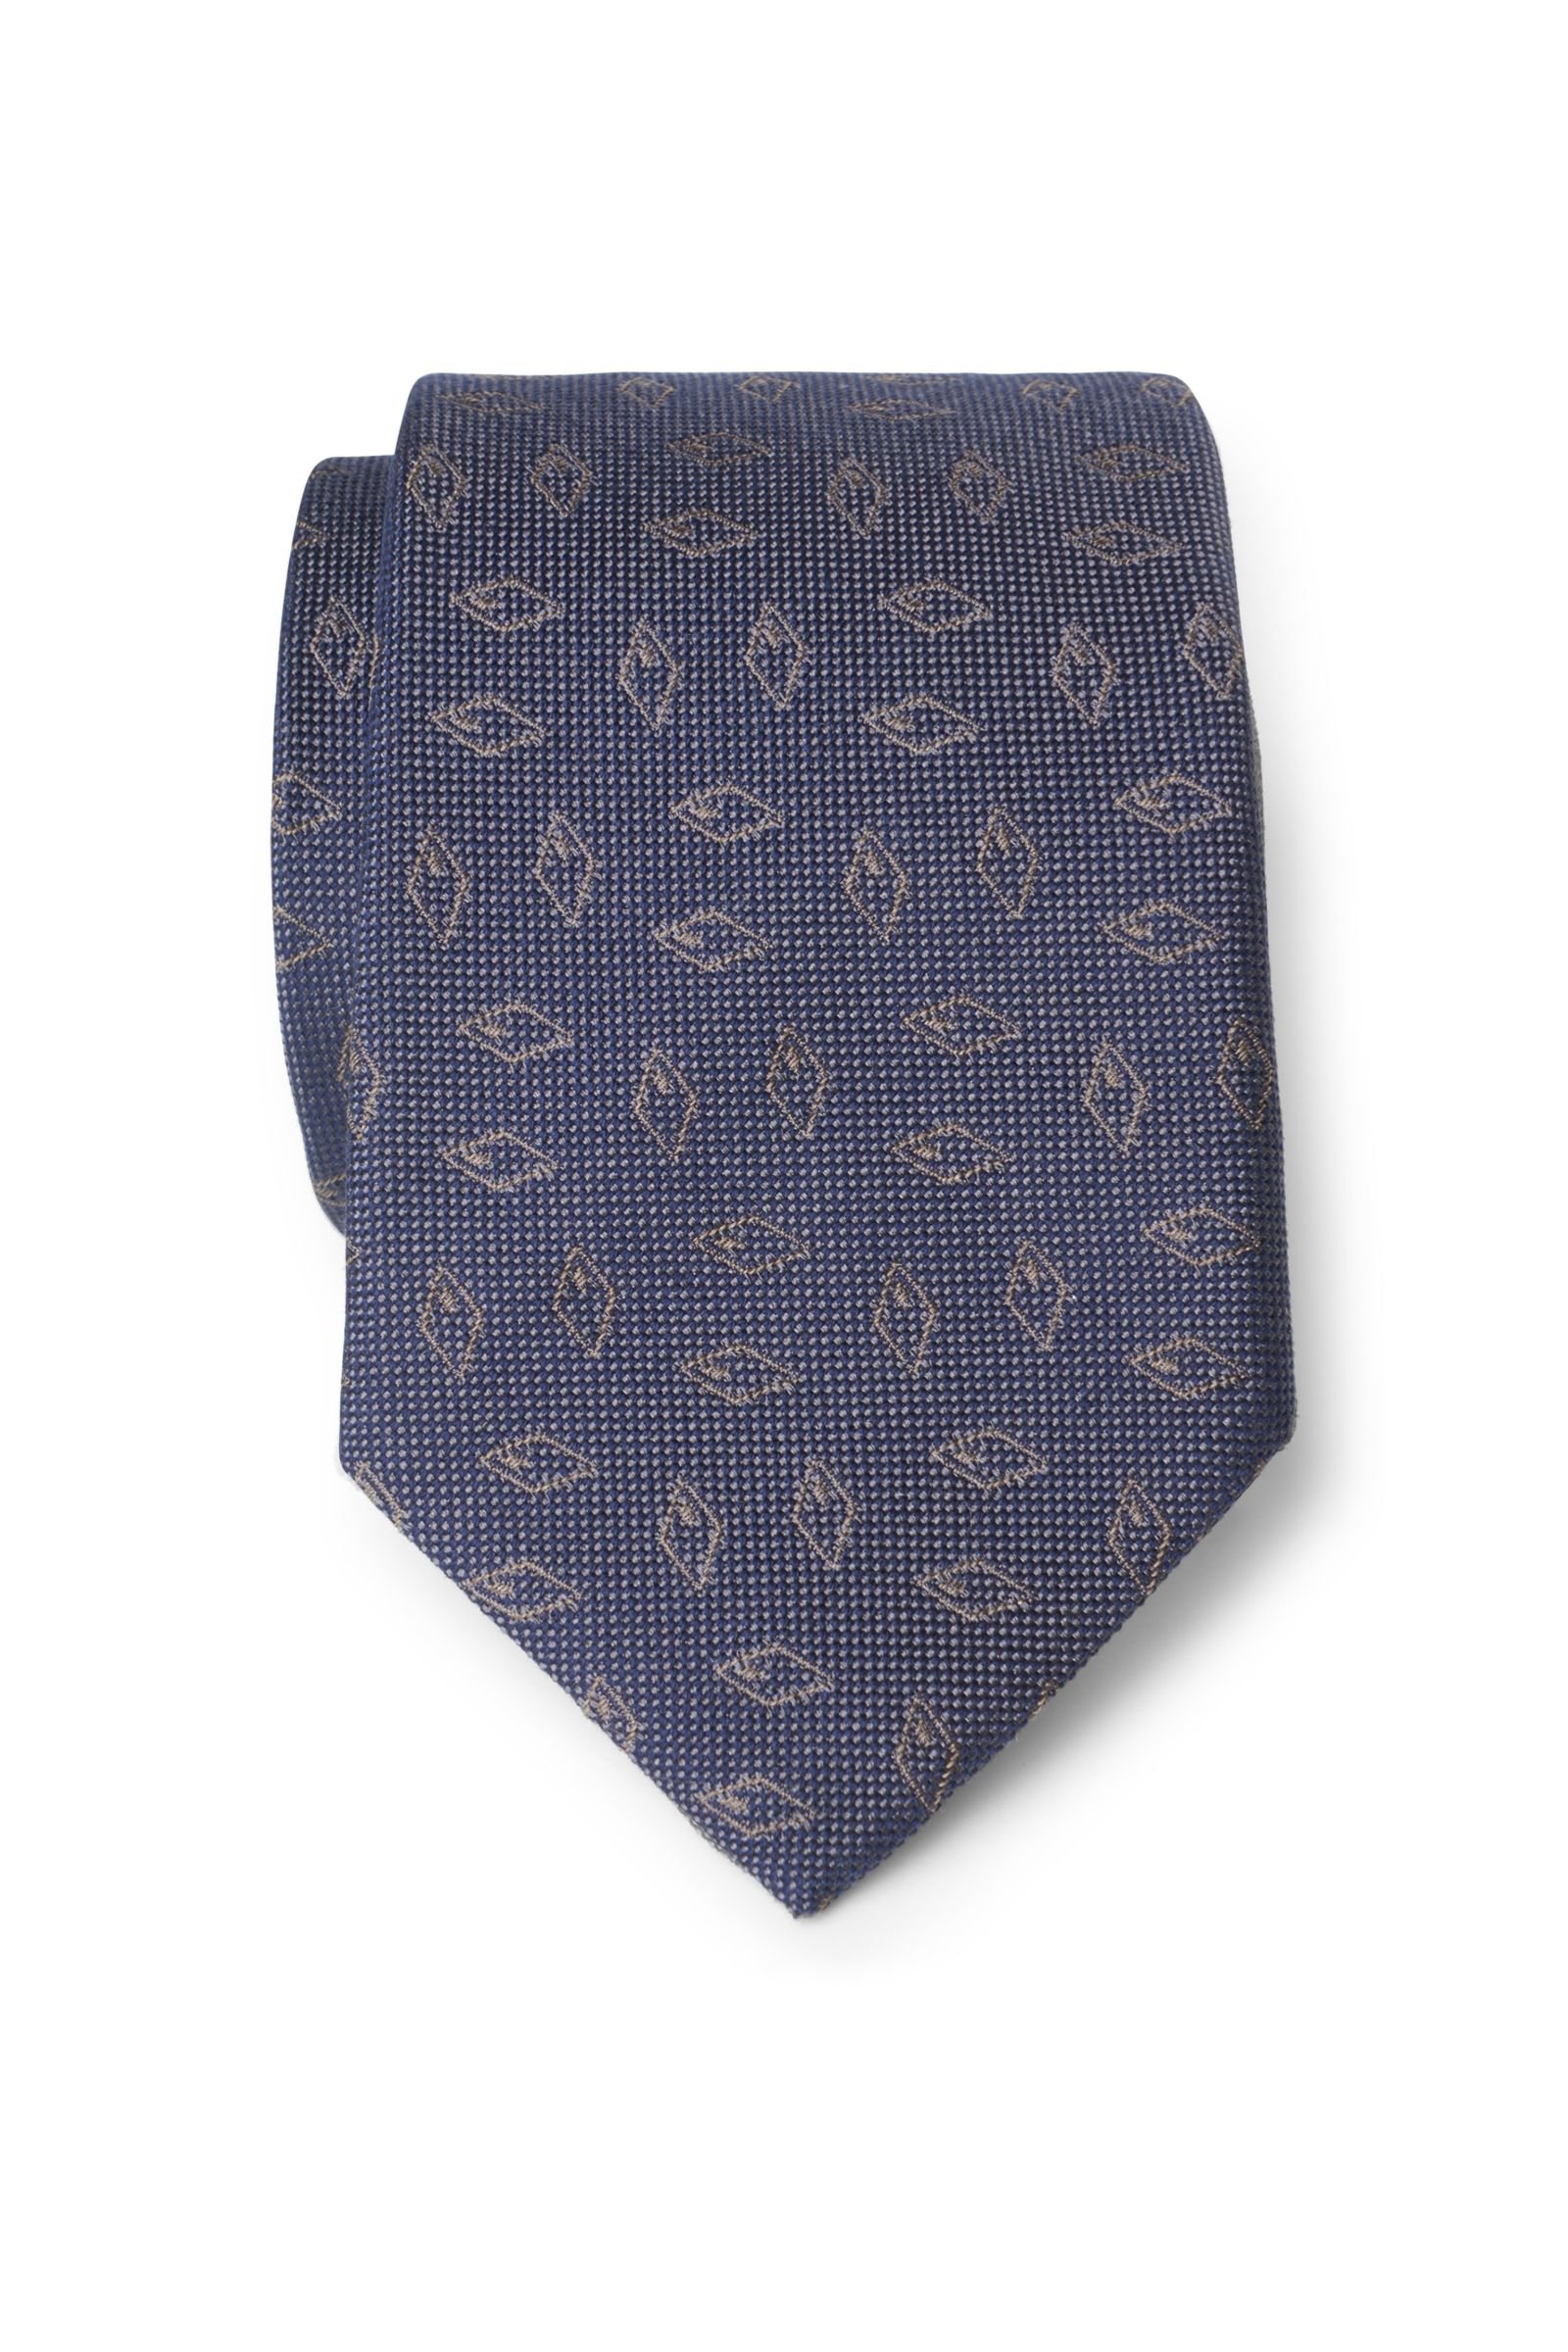 Silk tie navy/light brown patterned